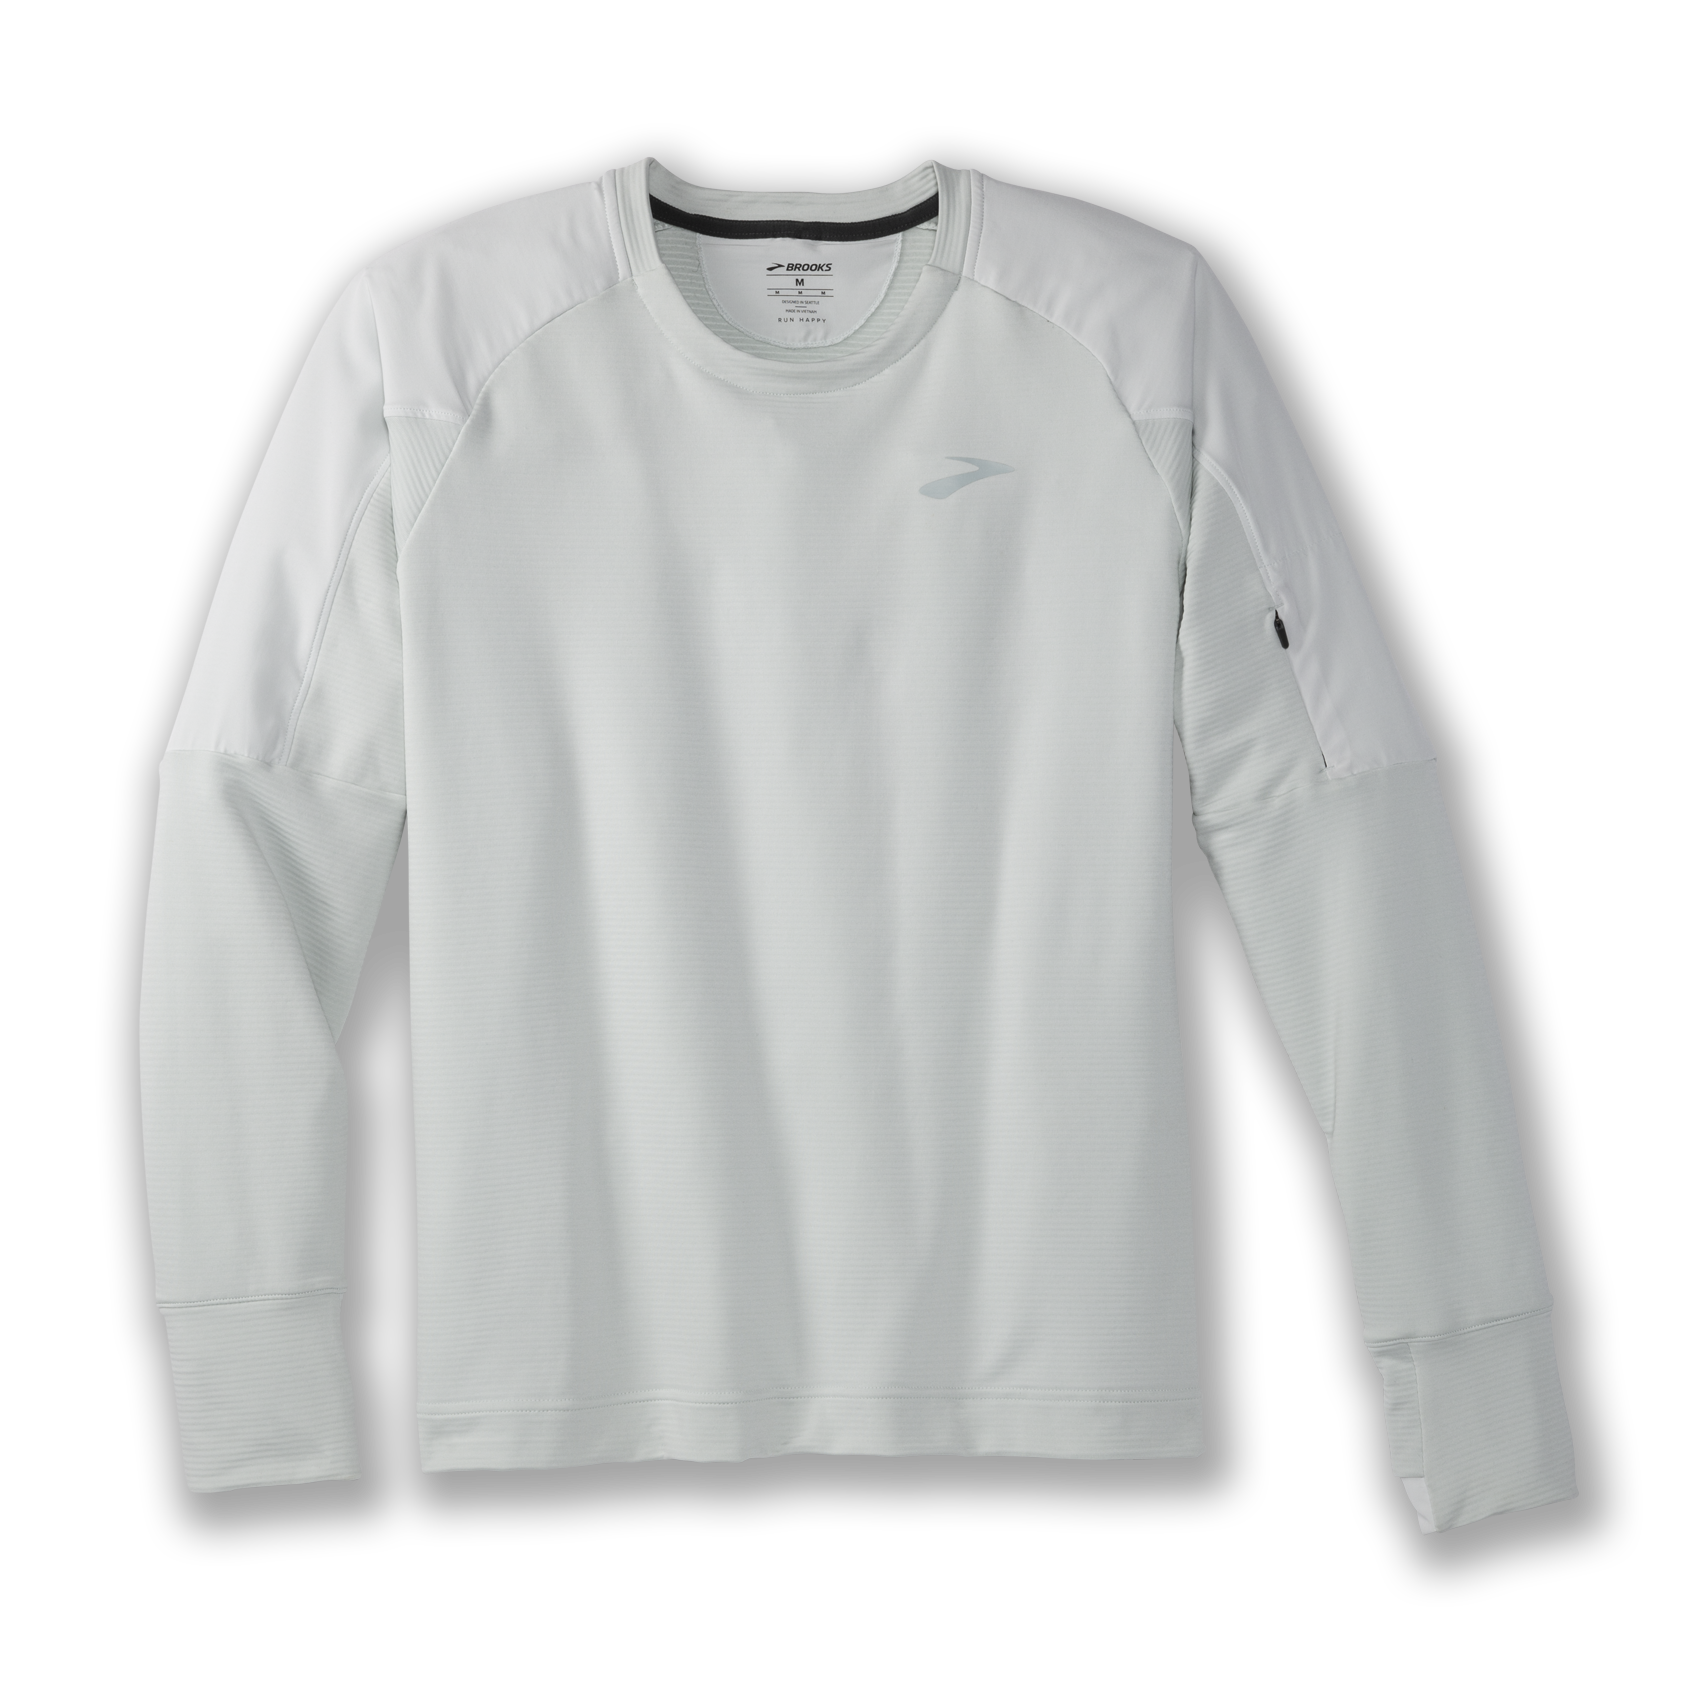 jord Perpetual reservation Notch Men's Thermal Long Sleeve Running Shirt